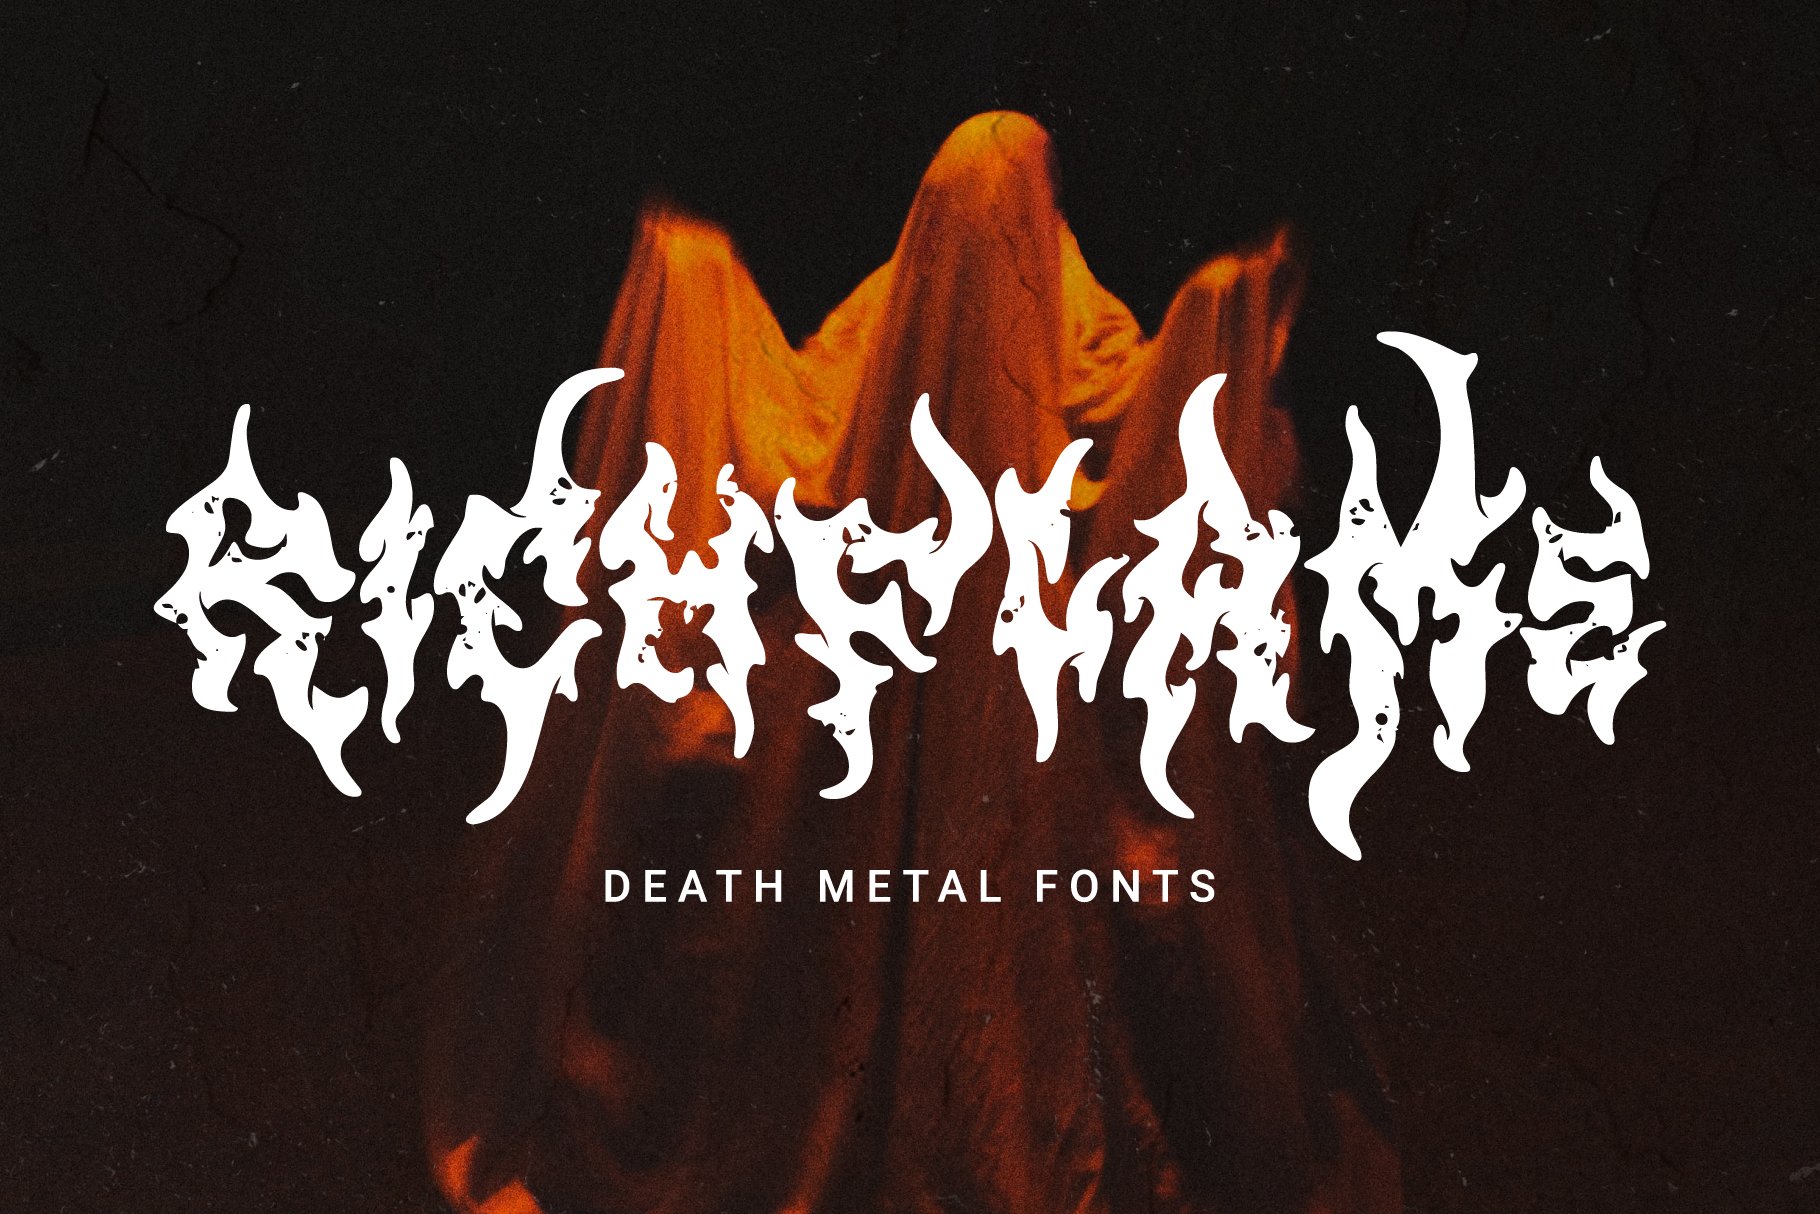 Richflame - Death Metal Fonts cover image.